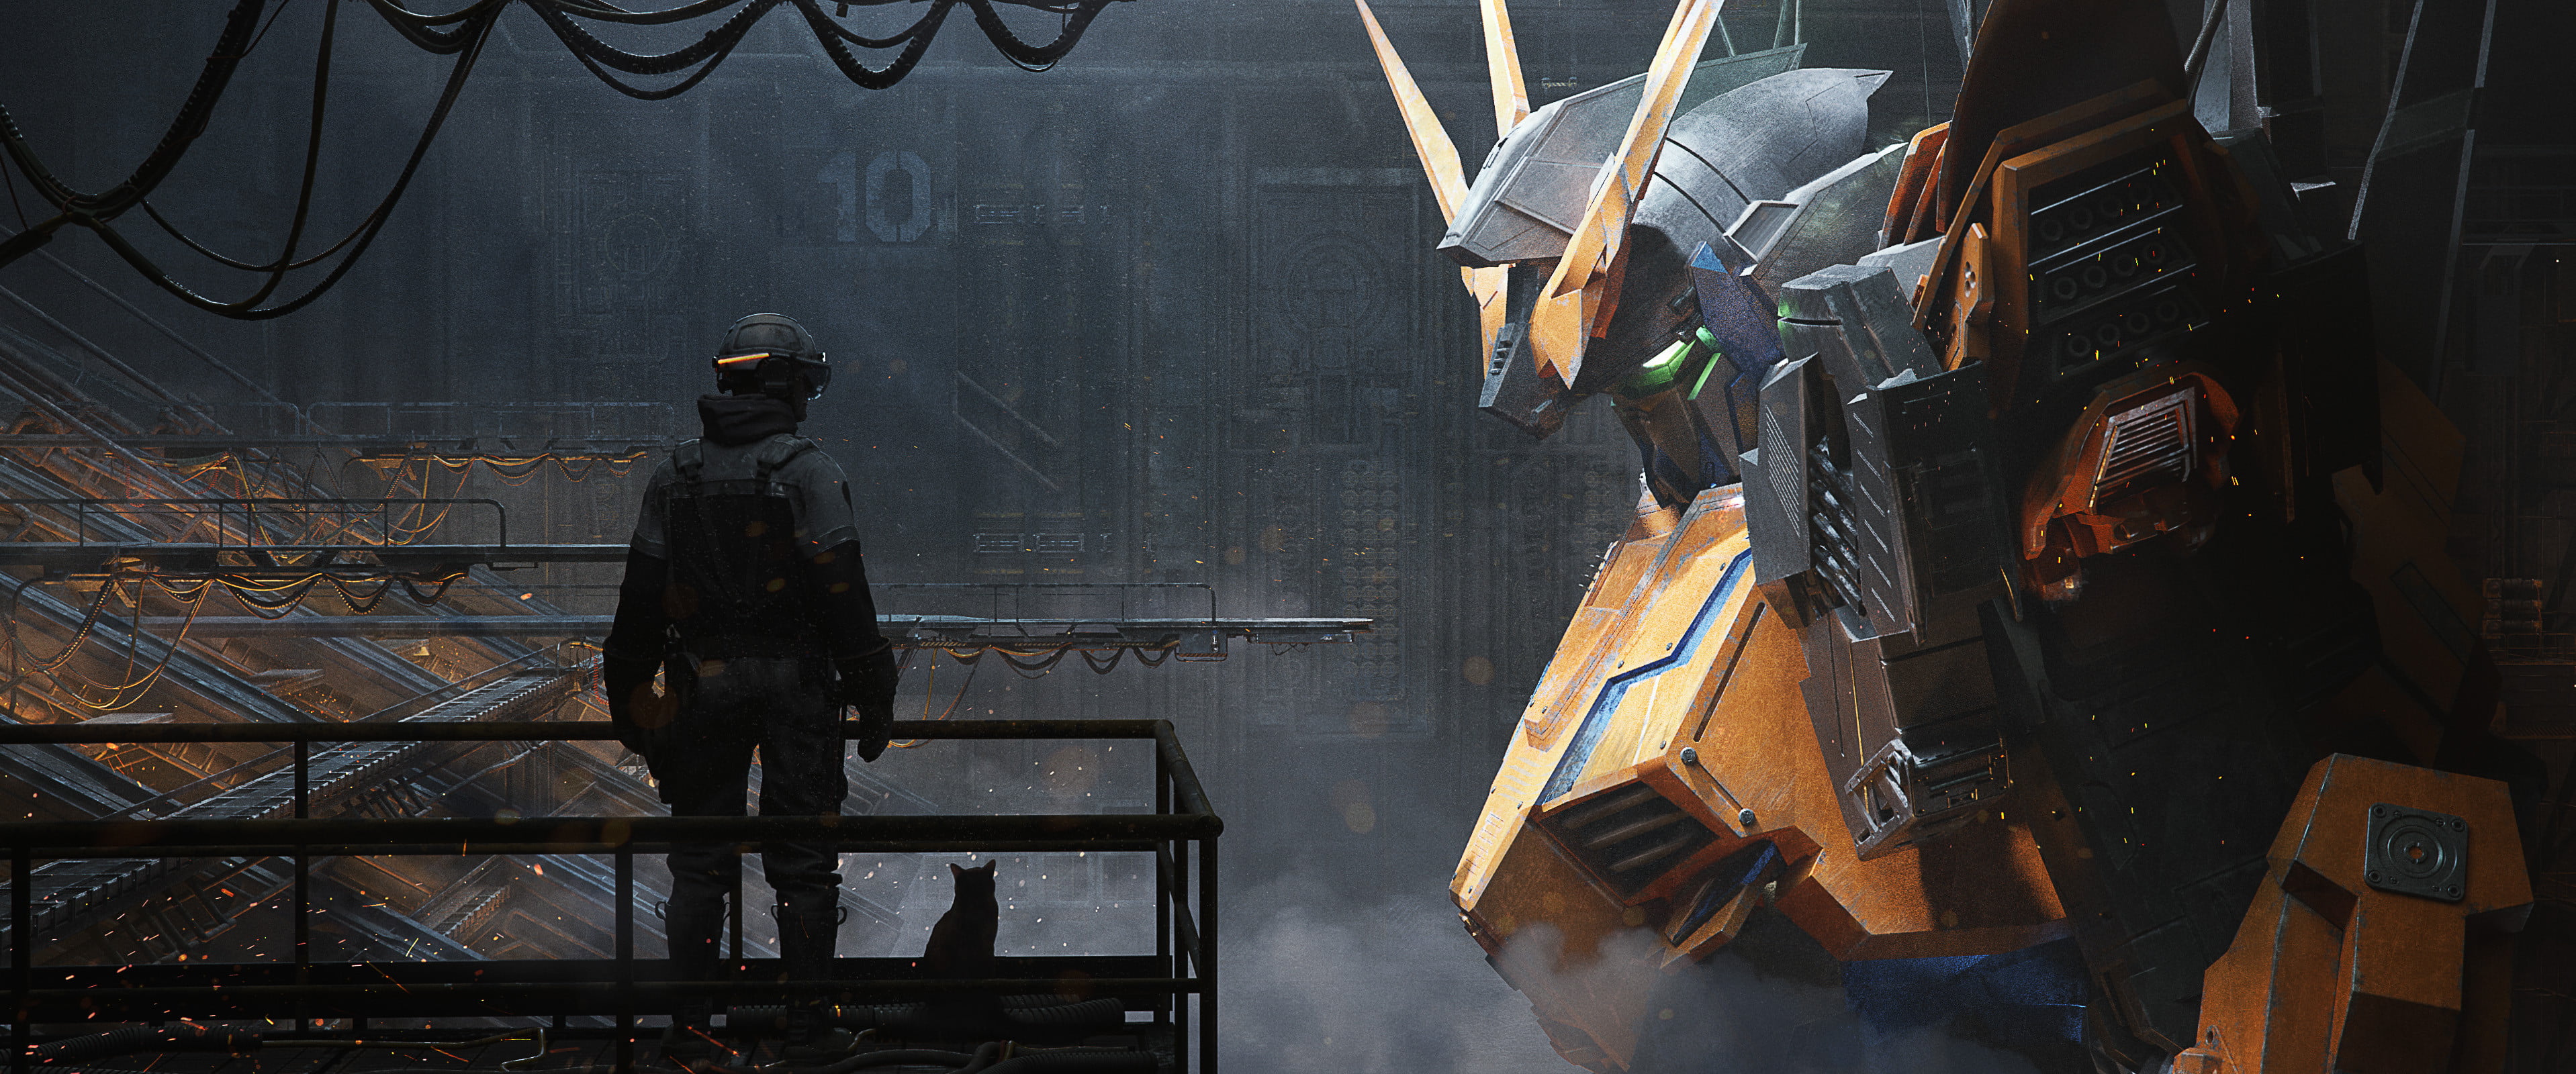 Gundam, robot, giant, digital, digital art, illustration, artwork